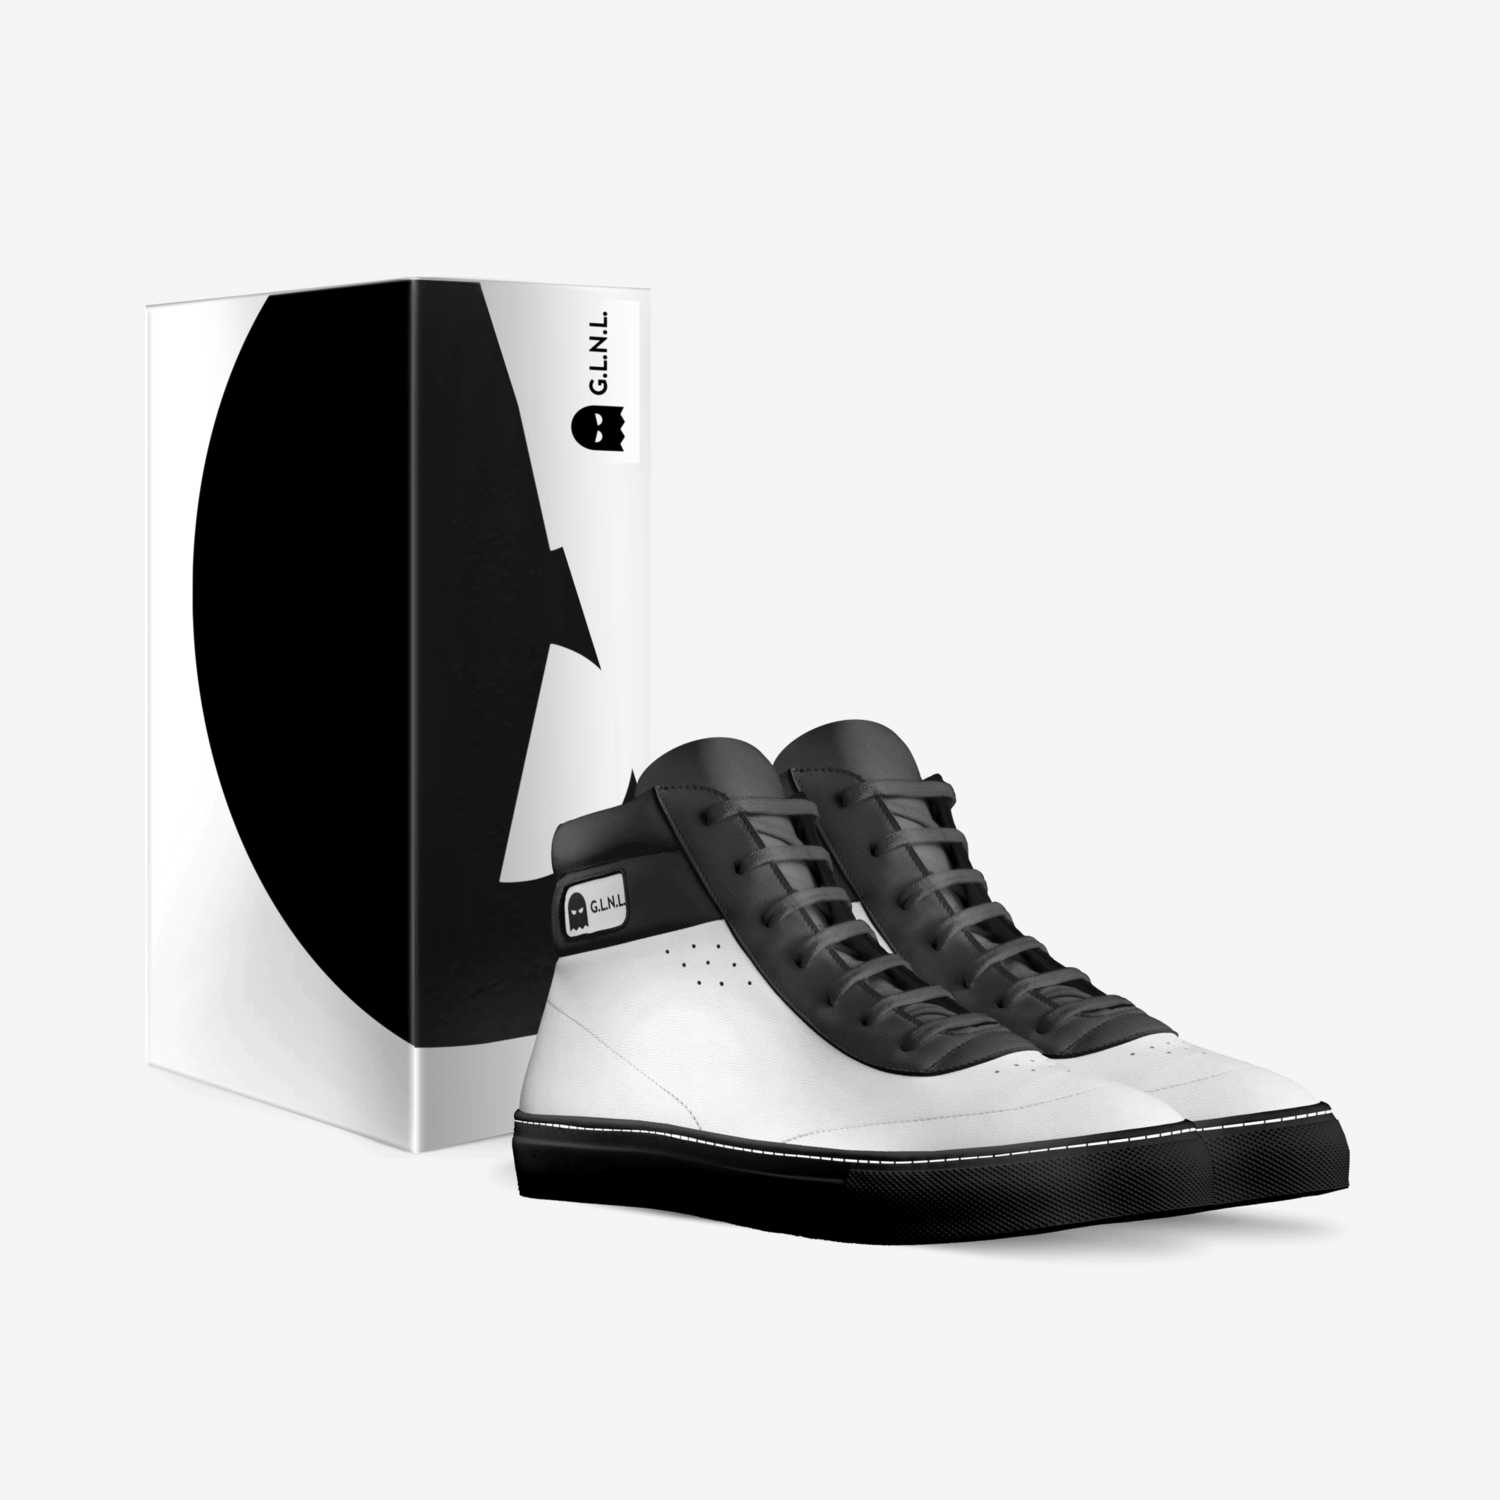 G.L.N.L. custom made in Italy shoes by Benjamin Hartkopf | Box view